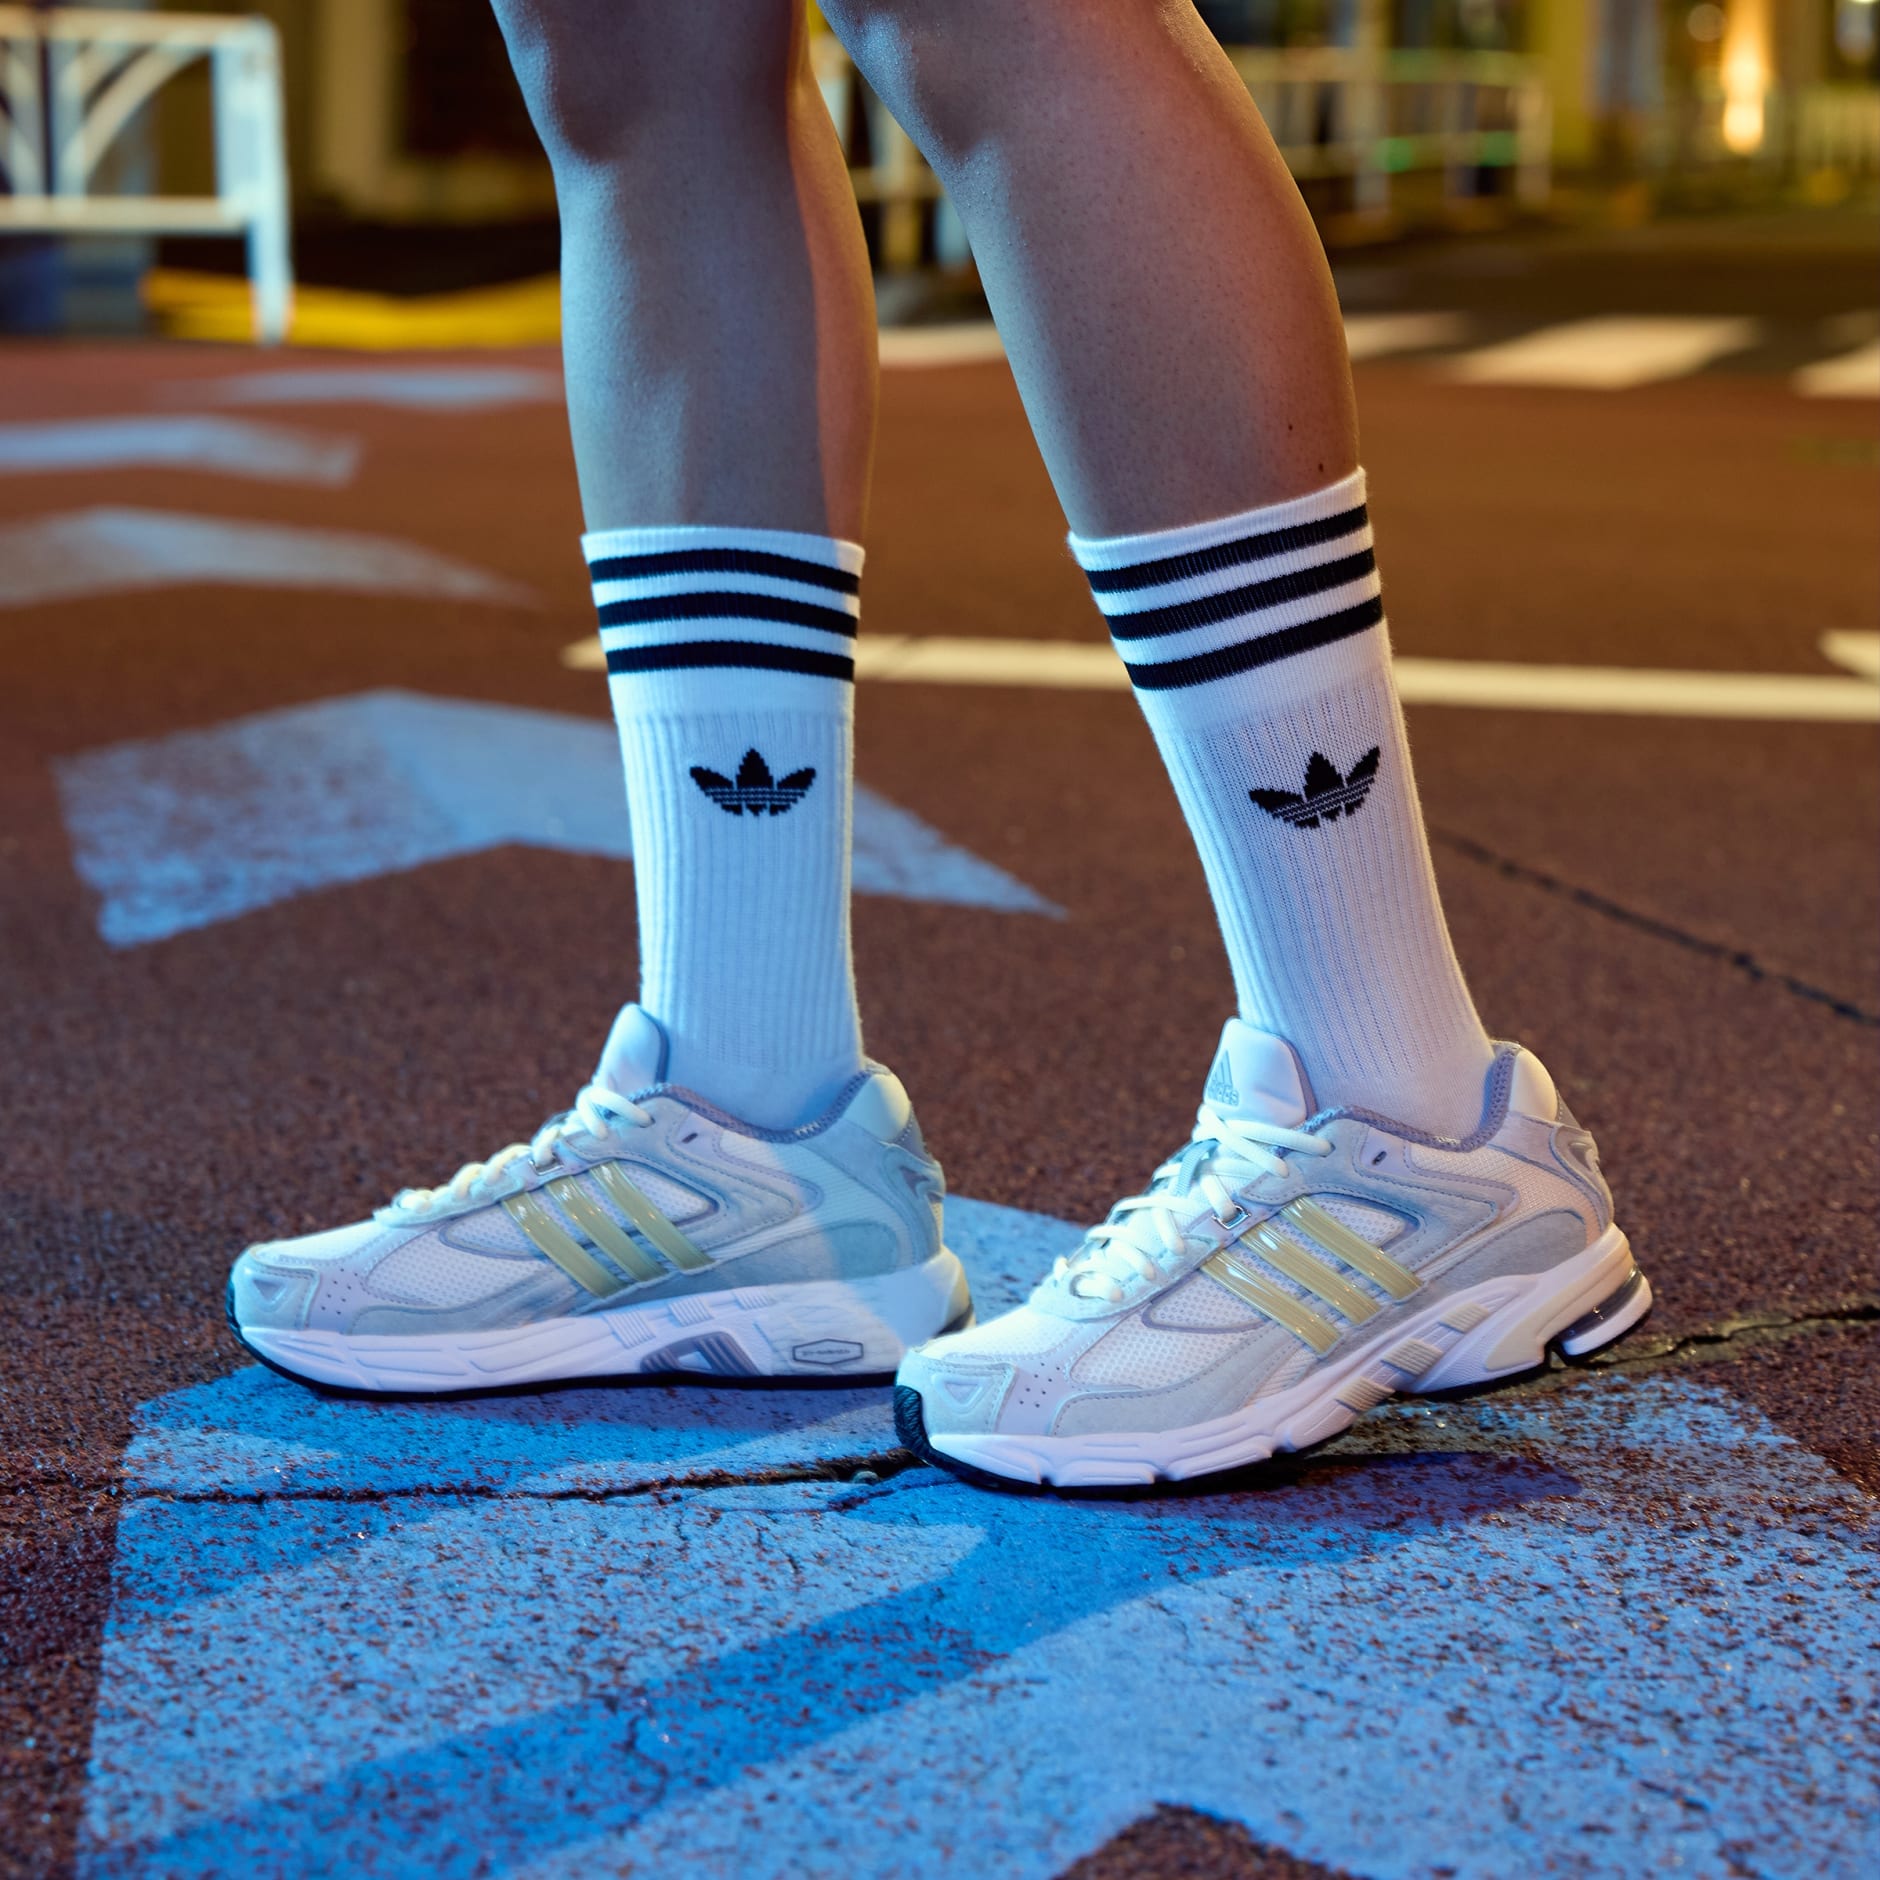 Men's Shoes - Response CL Shoes - White | adidas Oman